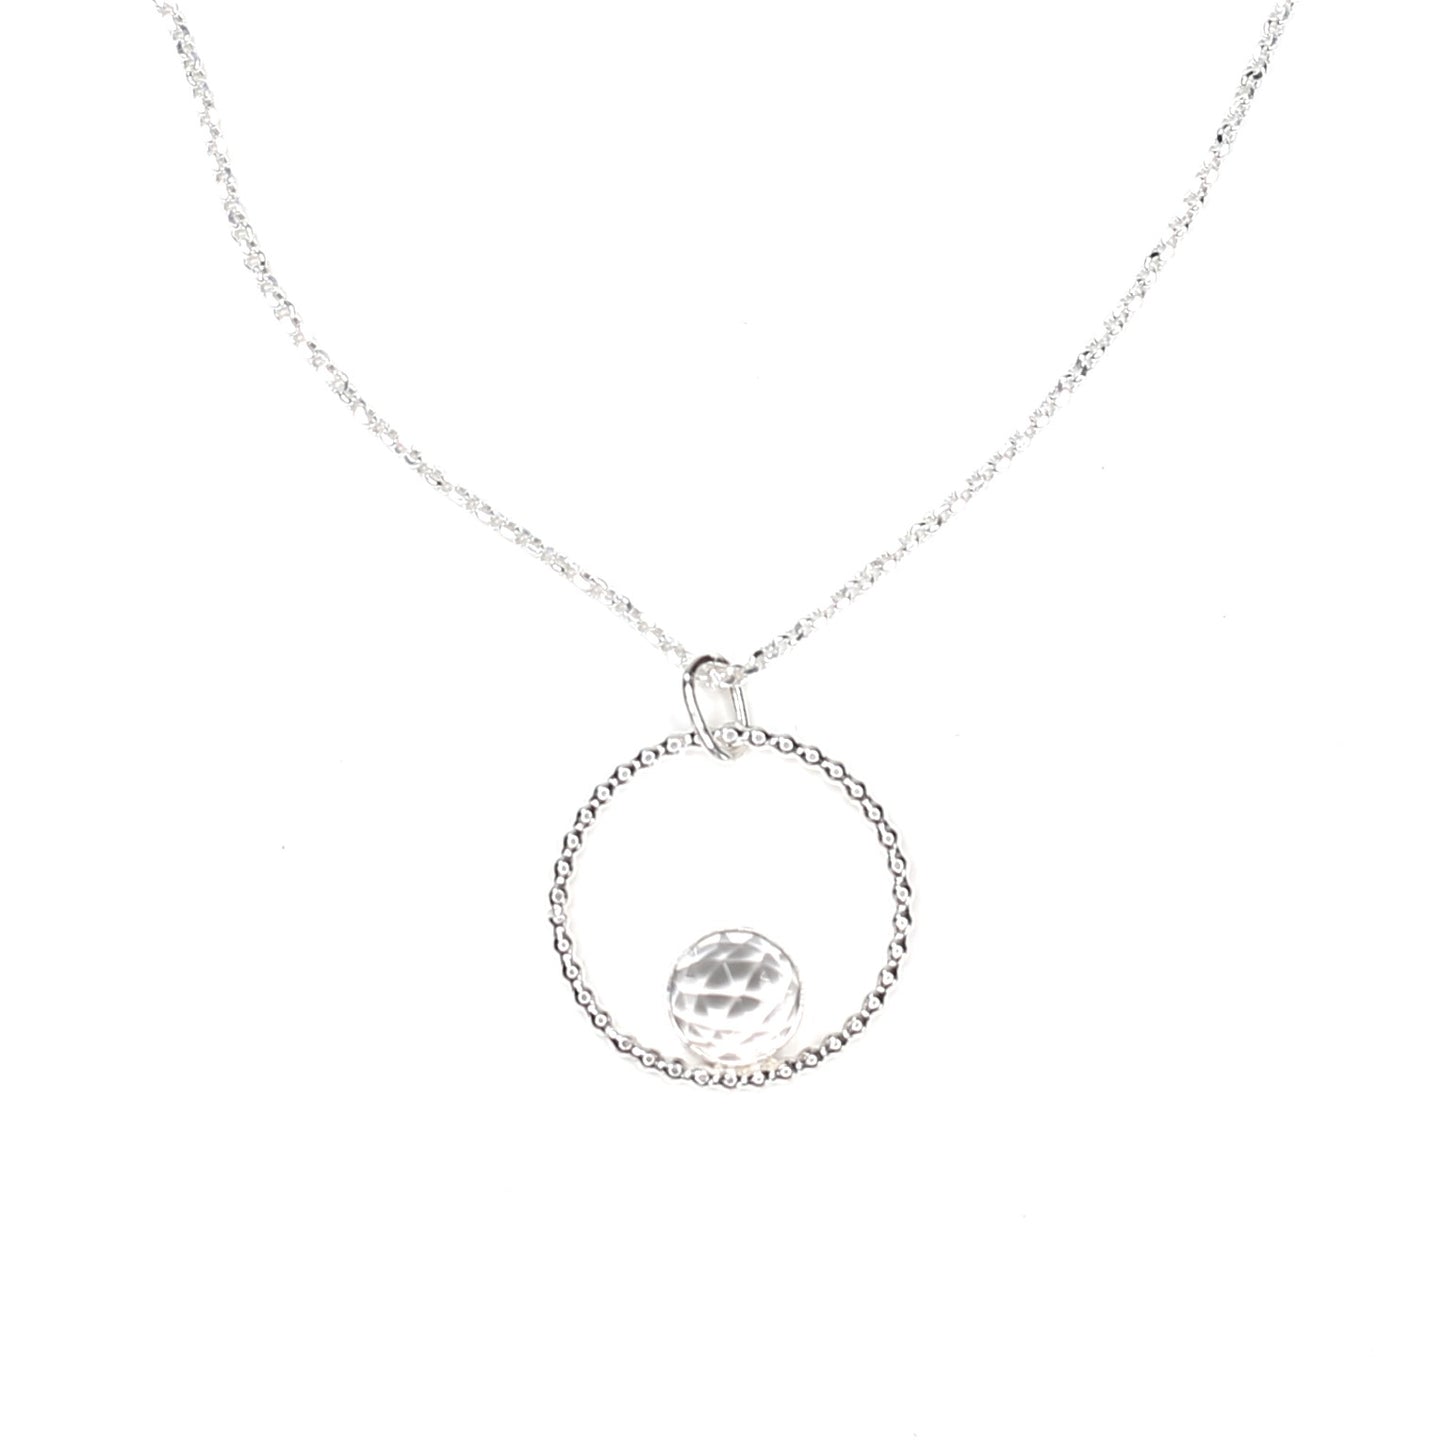 Gemstone Beaded Circle Necklaces